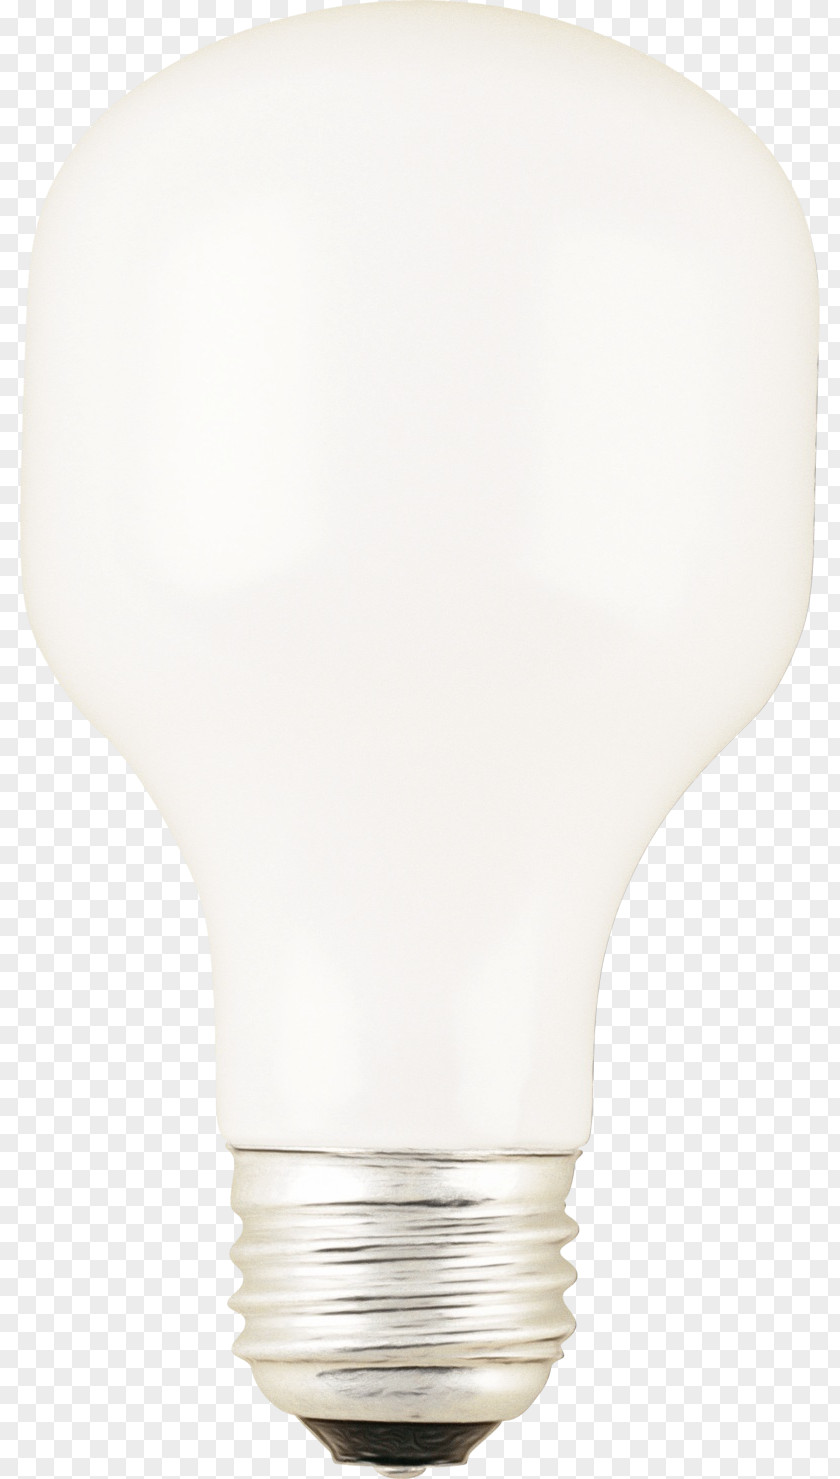 Compact Fluorescent Lamp Light Fixture Bulb PNG